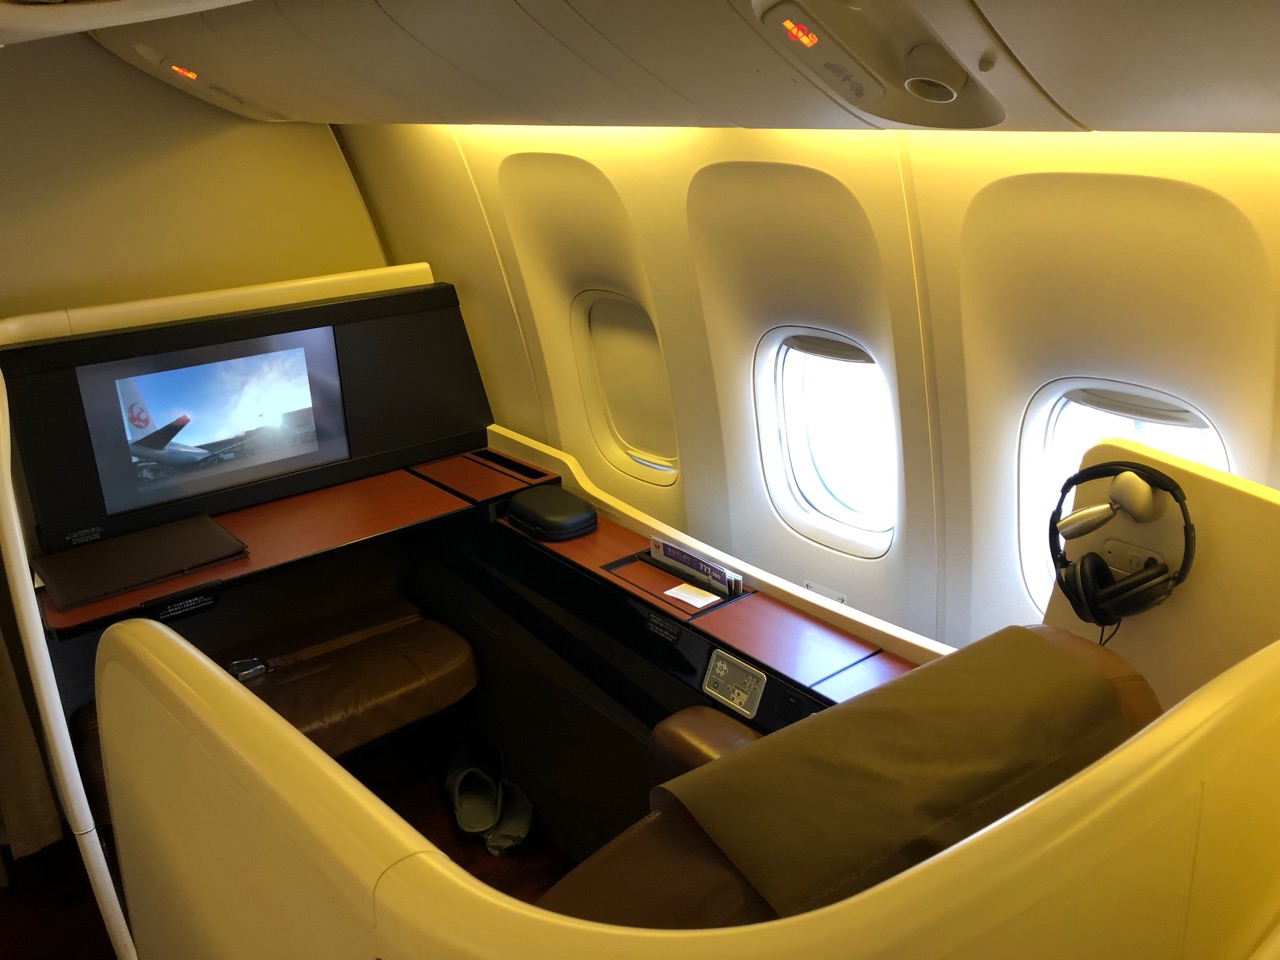 a desk in an airplane